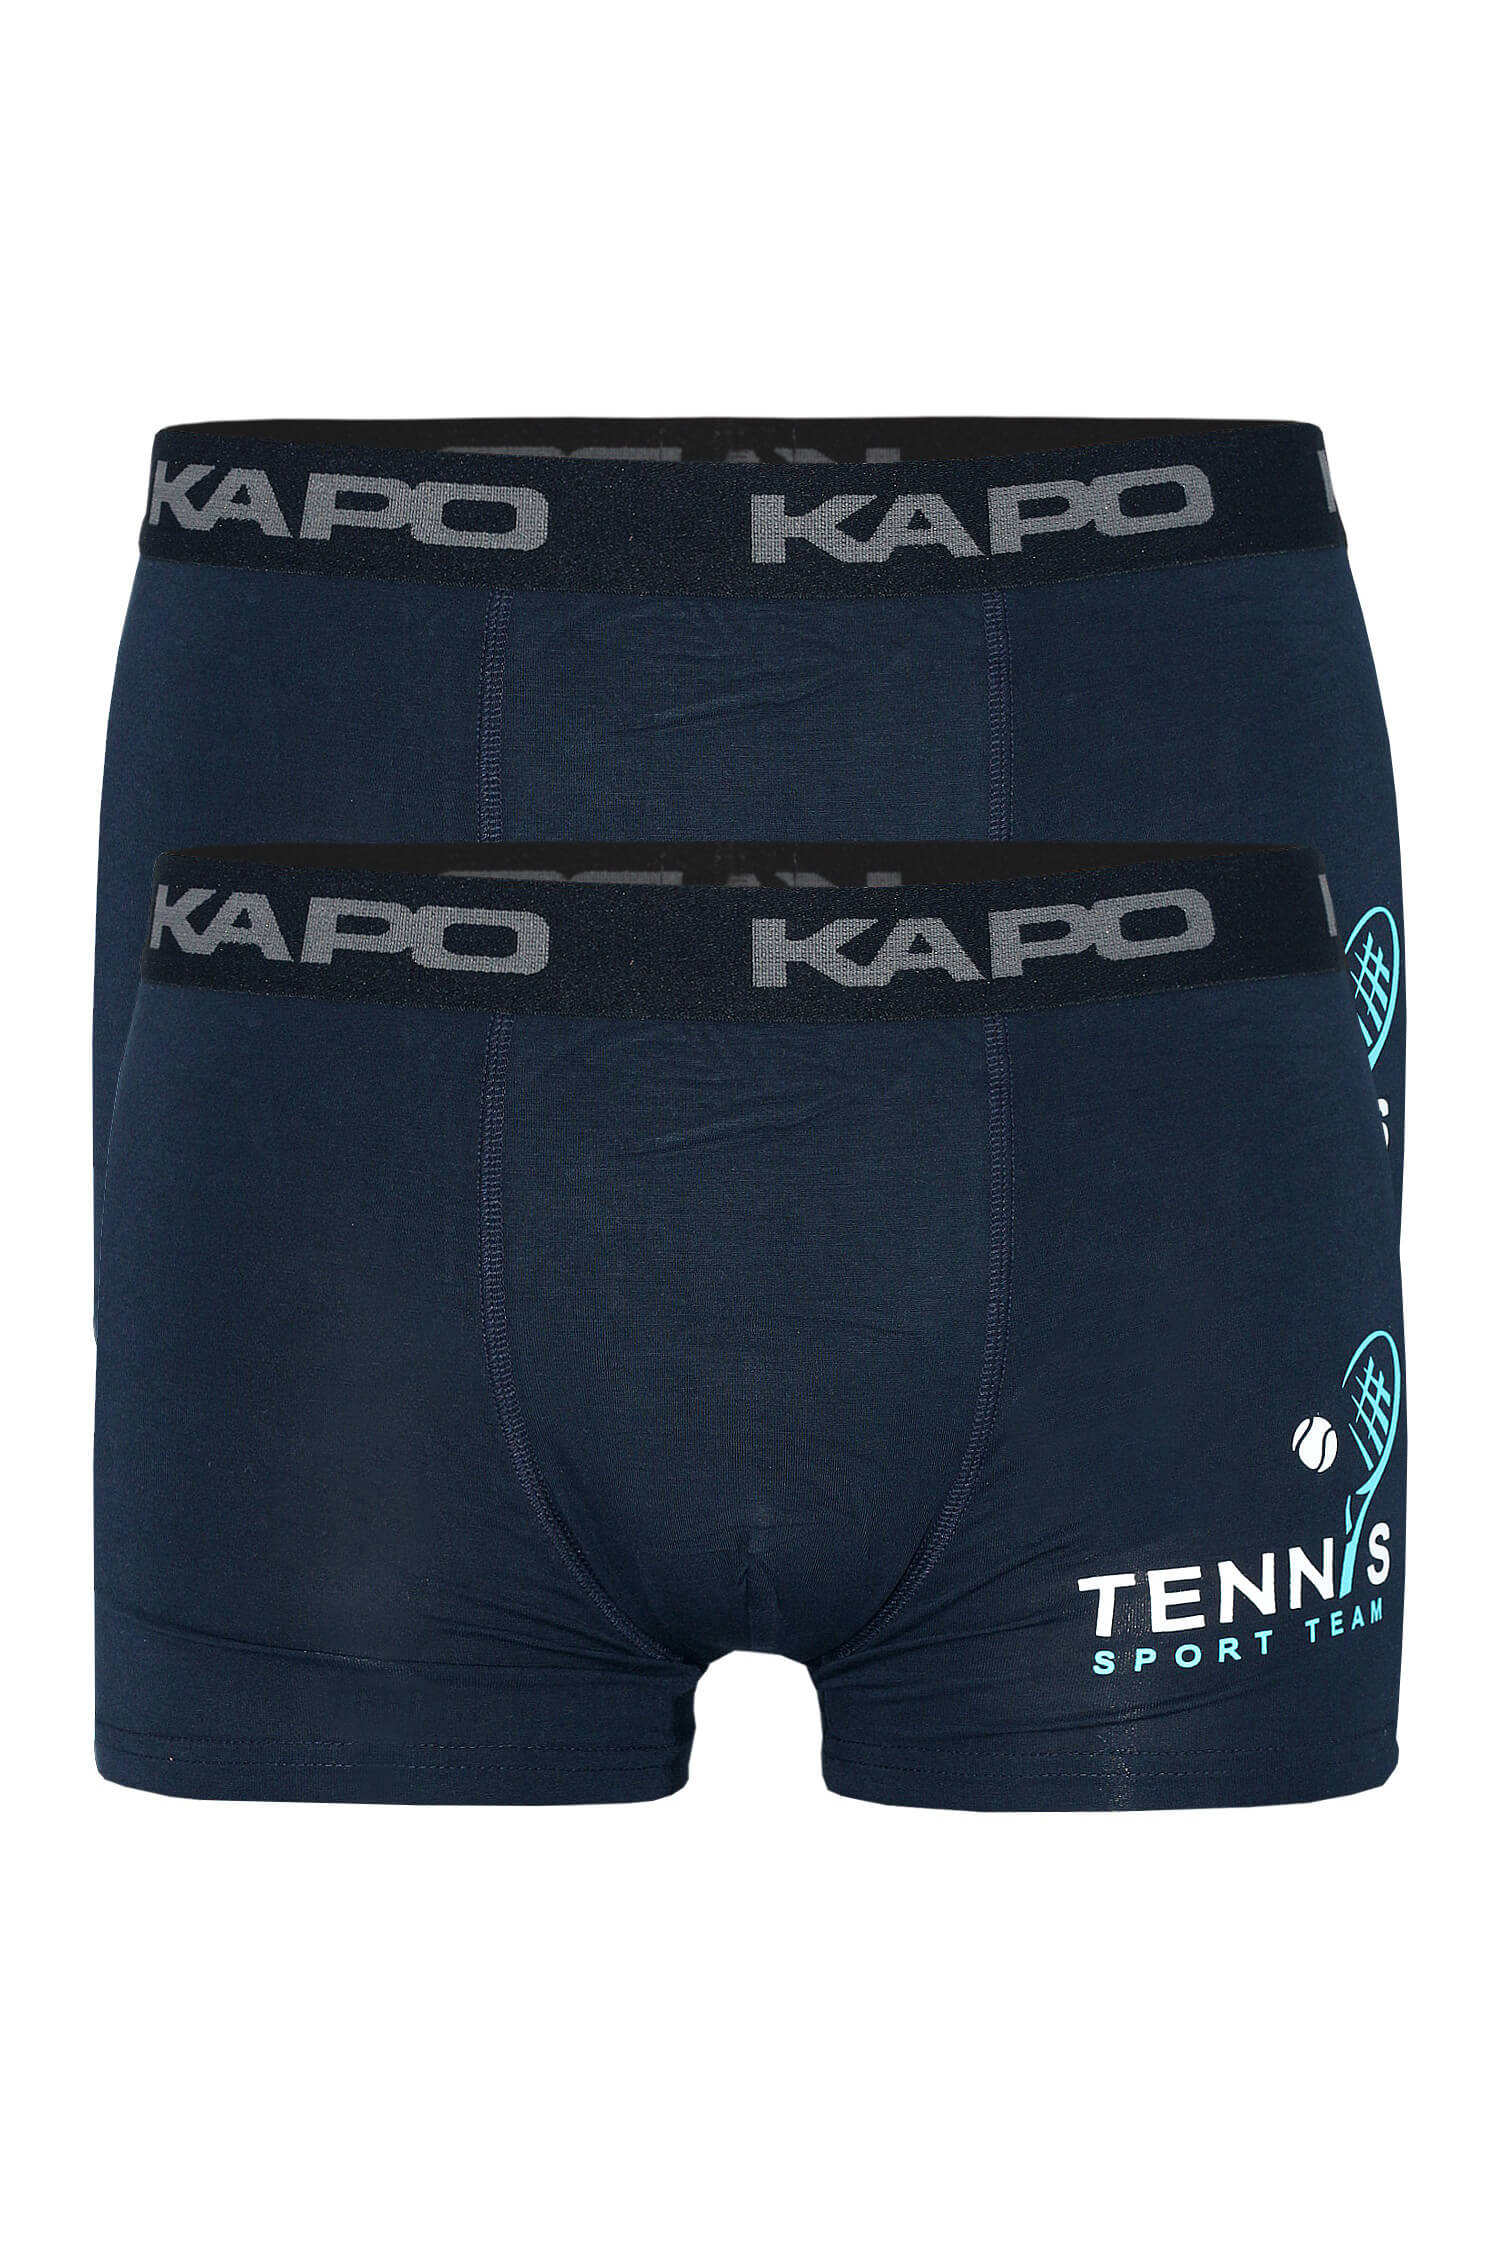 Rafael Kapo tenis boxerky - dvojbal M tmavě modrá